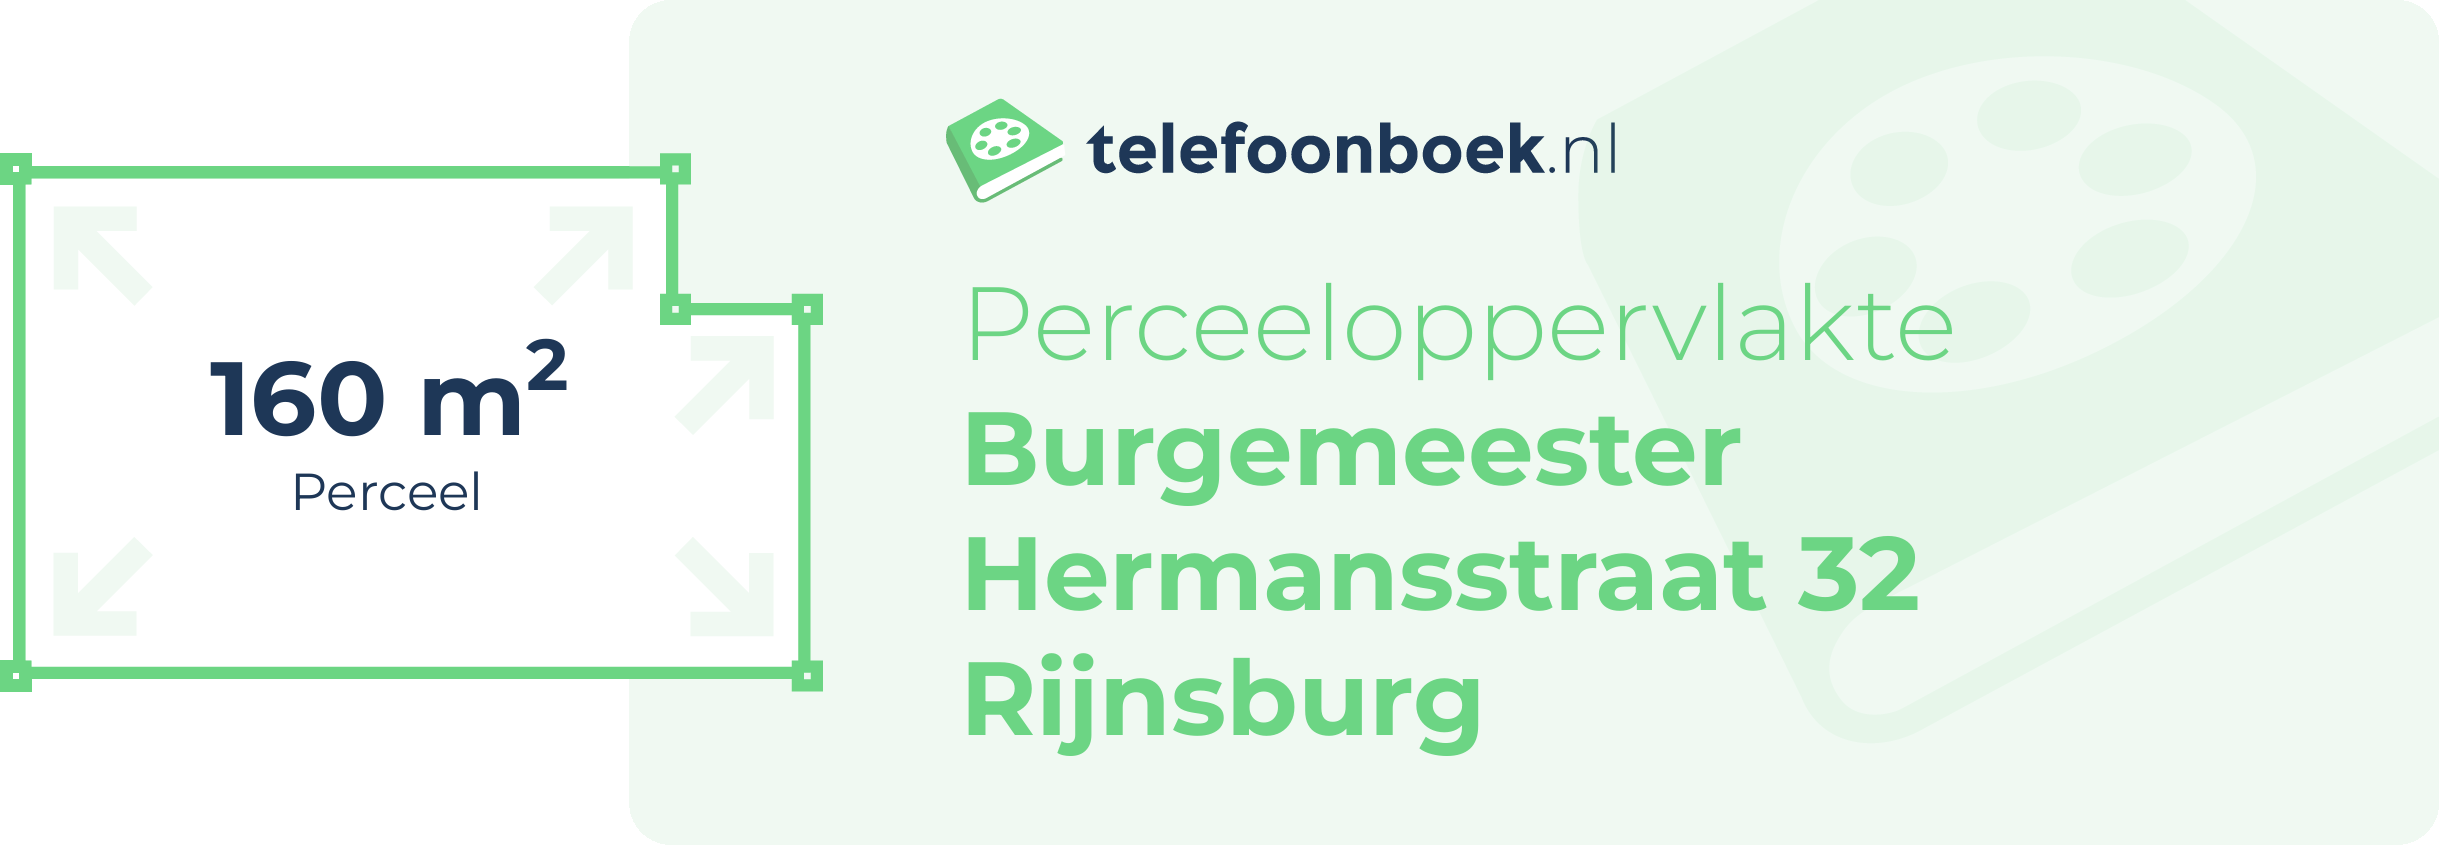 Perceeloppervlakte Burgemeester Hermansstraat 32 Rijnsburg